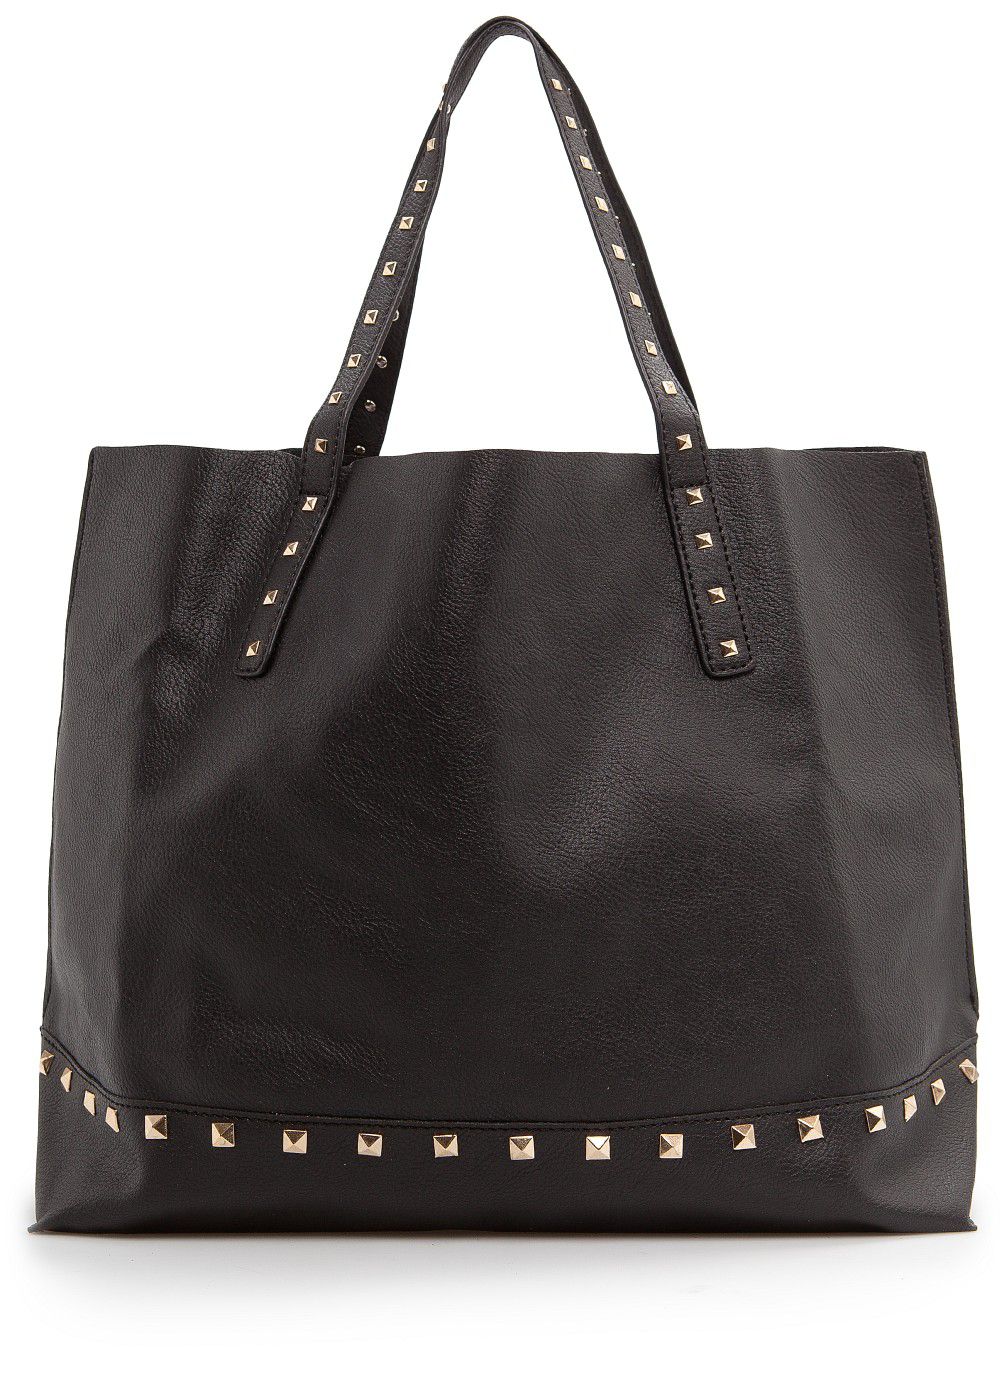 Mango Studded Shopper Bag in Black | Lyst